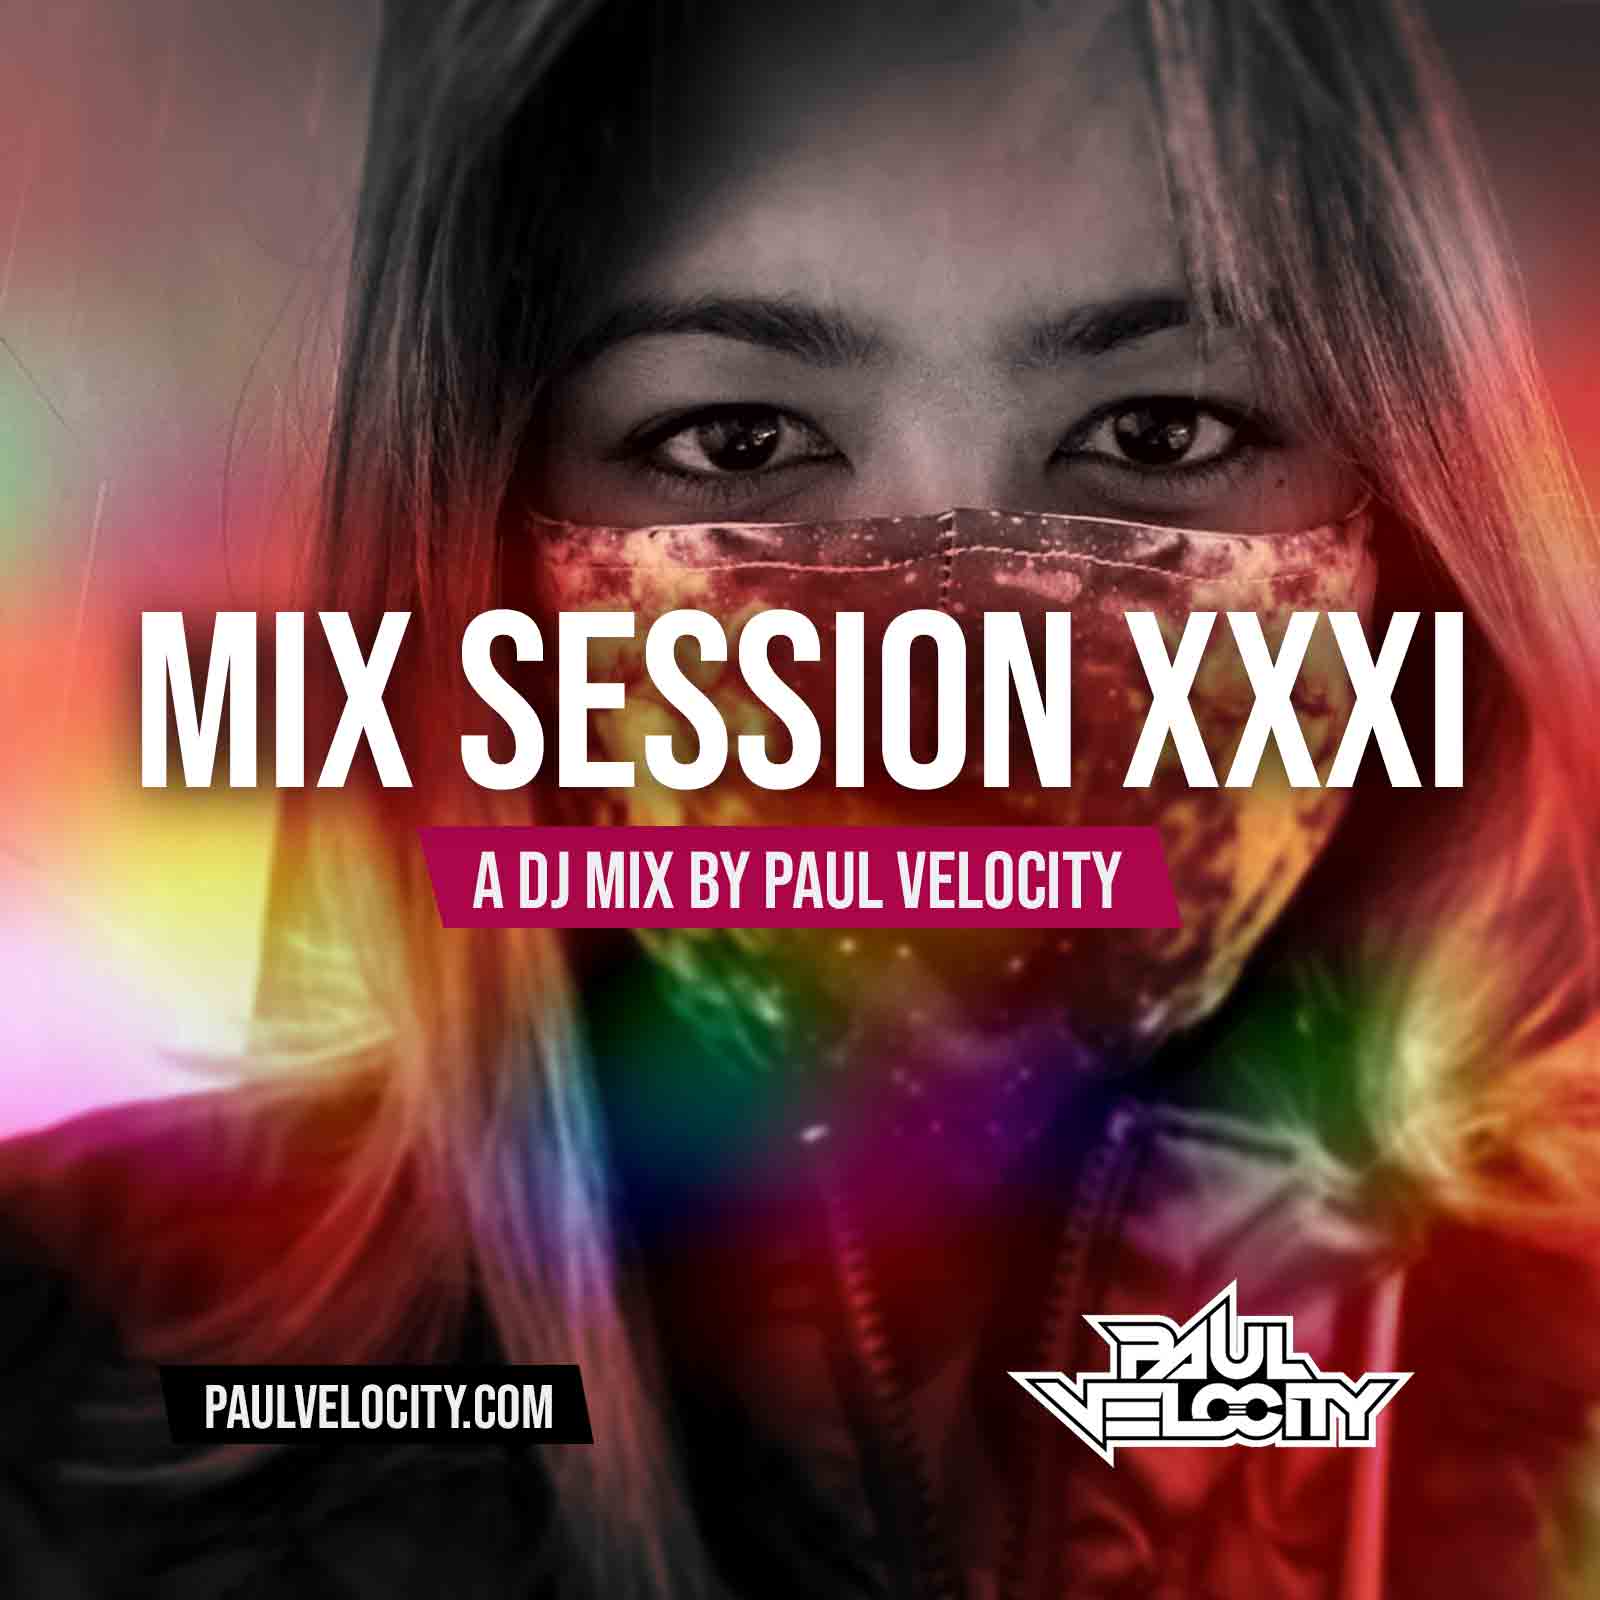 Mix Session XXXI